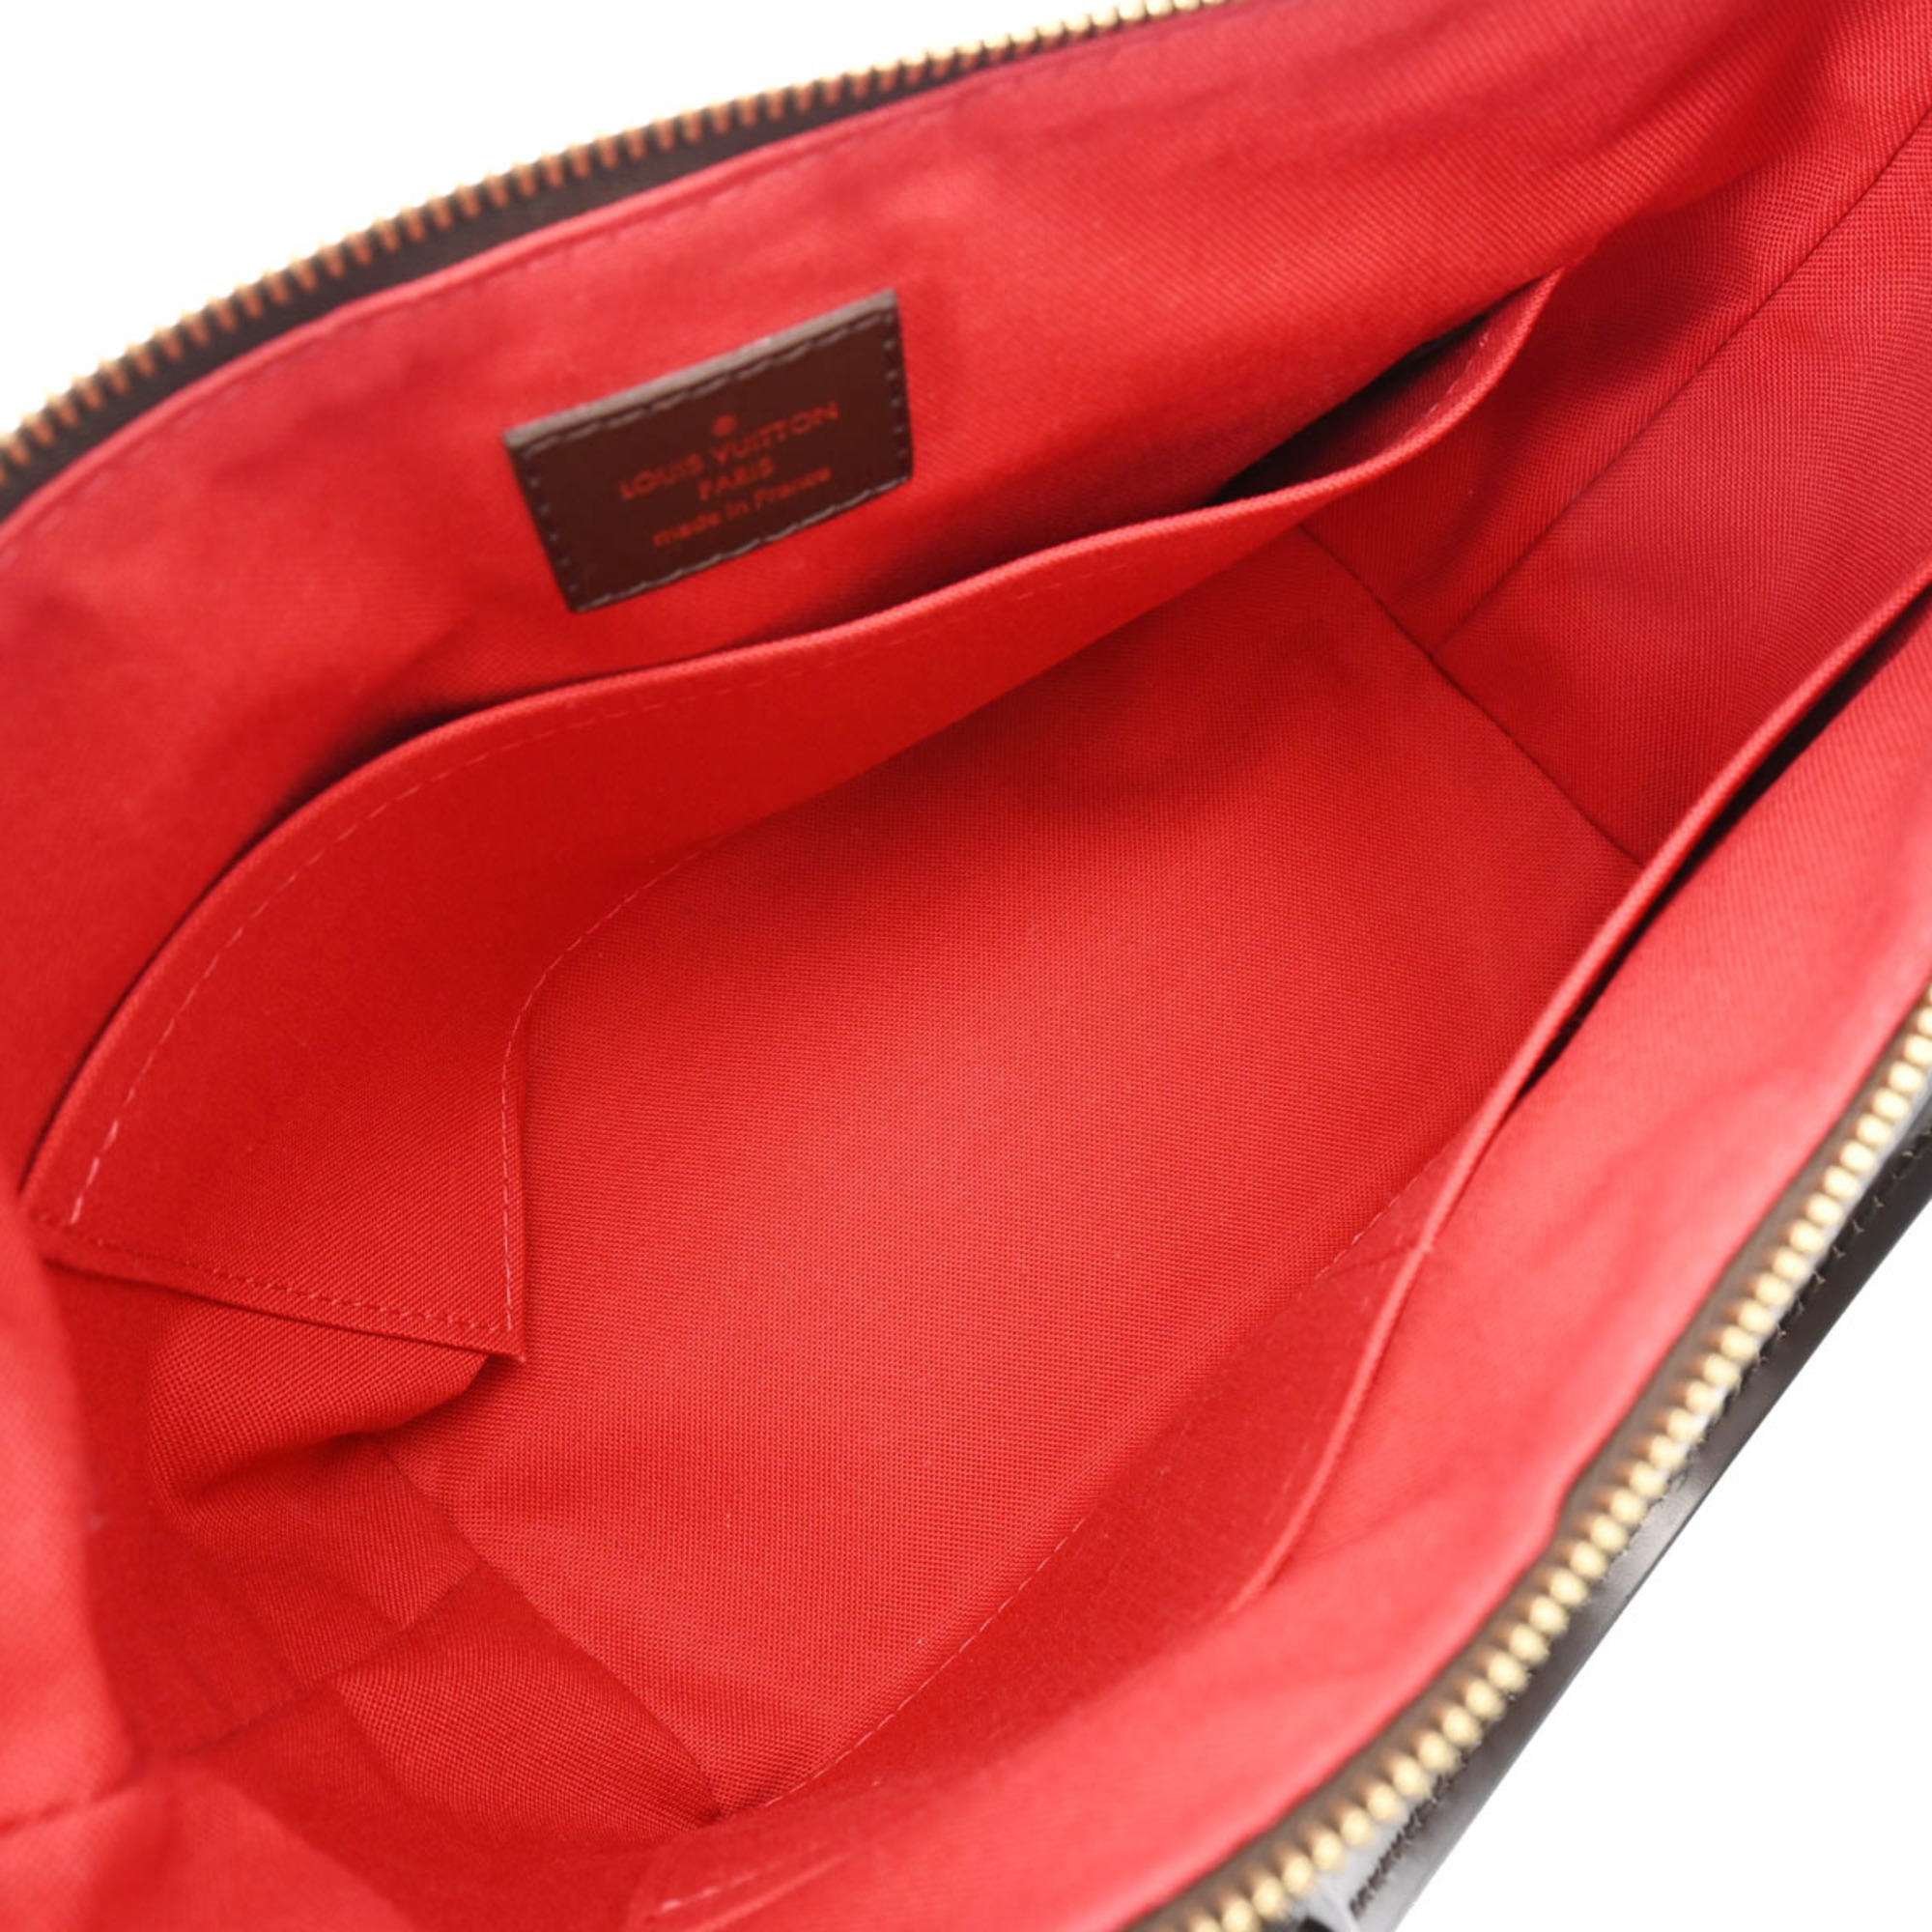 Louis Vuitton N41545 Women's Handbag Brown,Damier Canvas